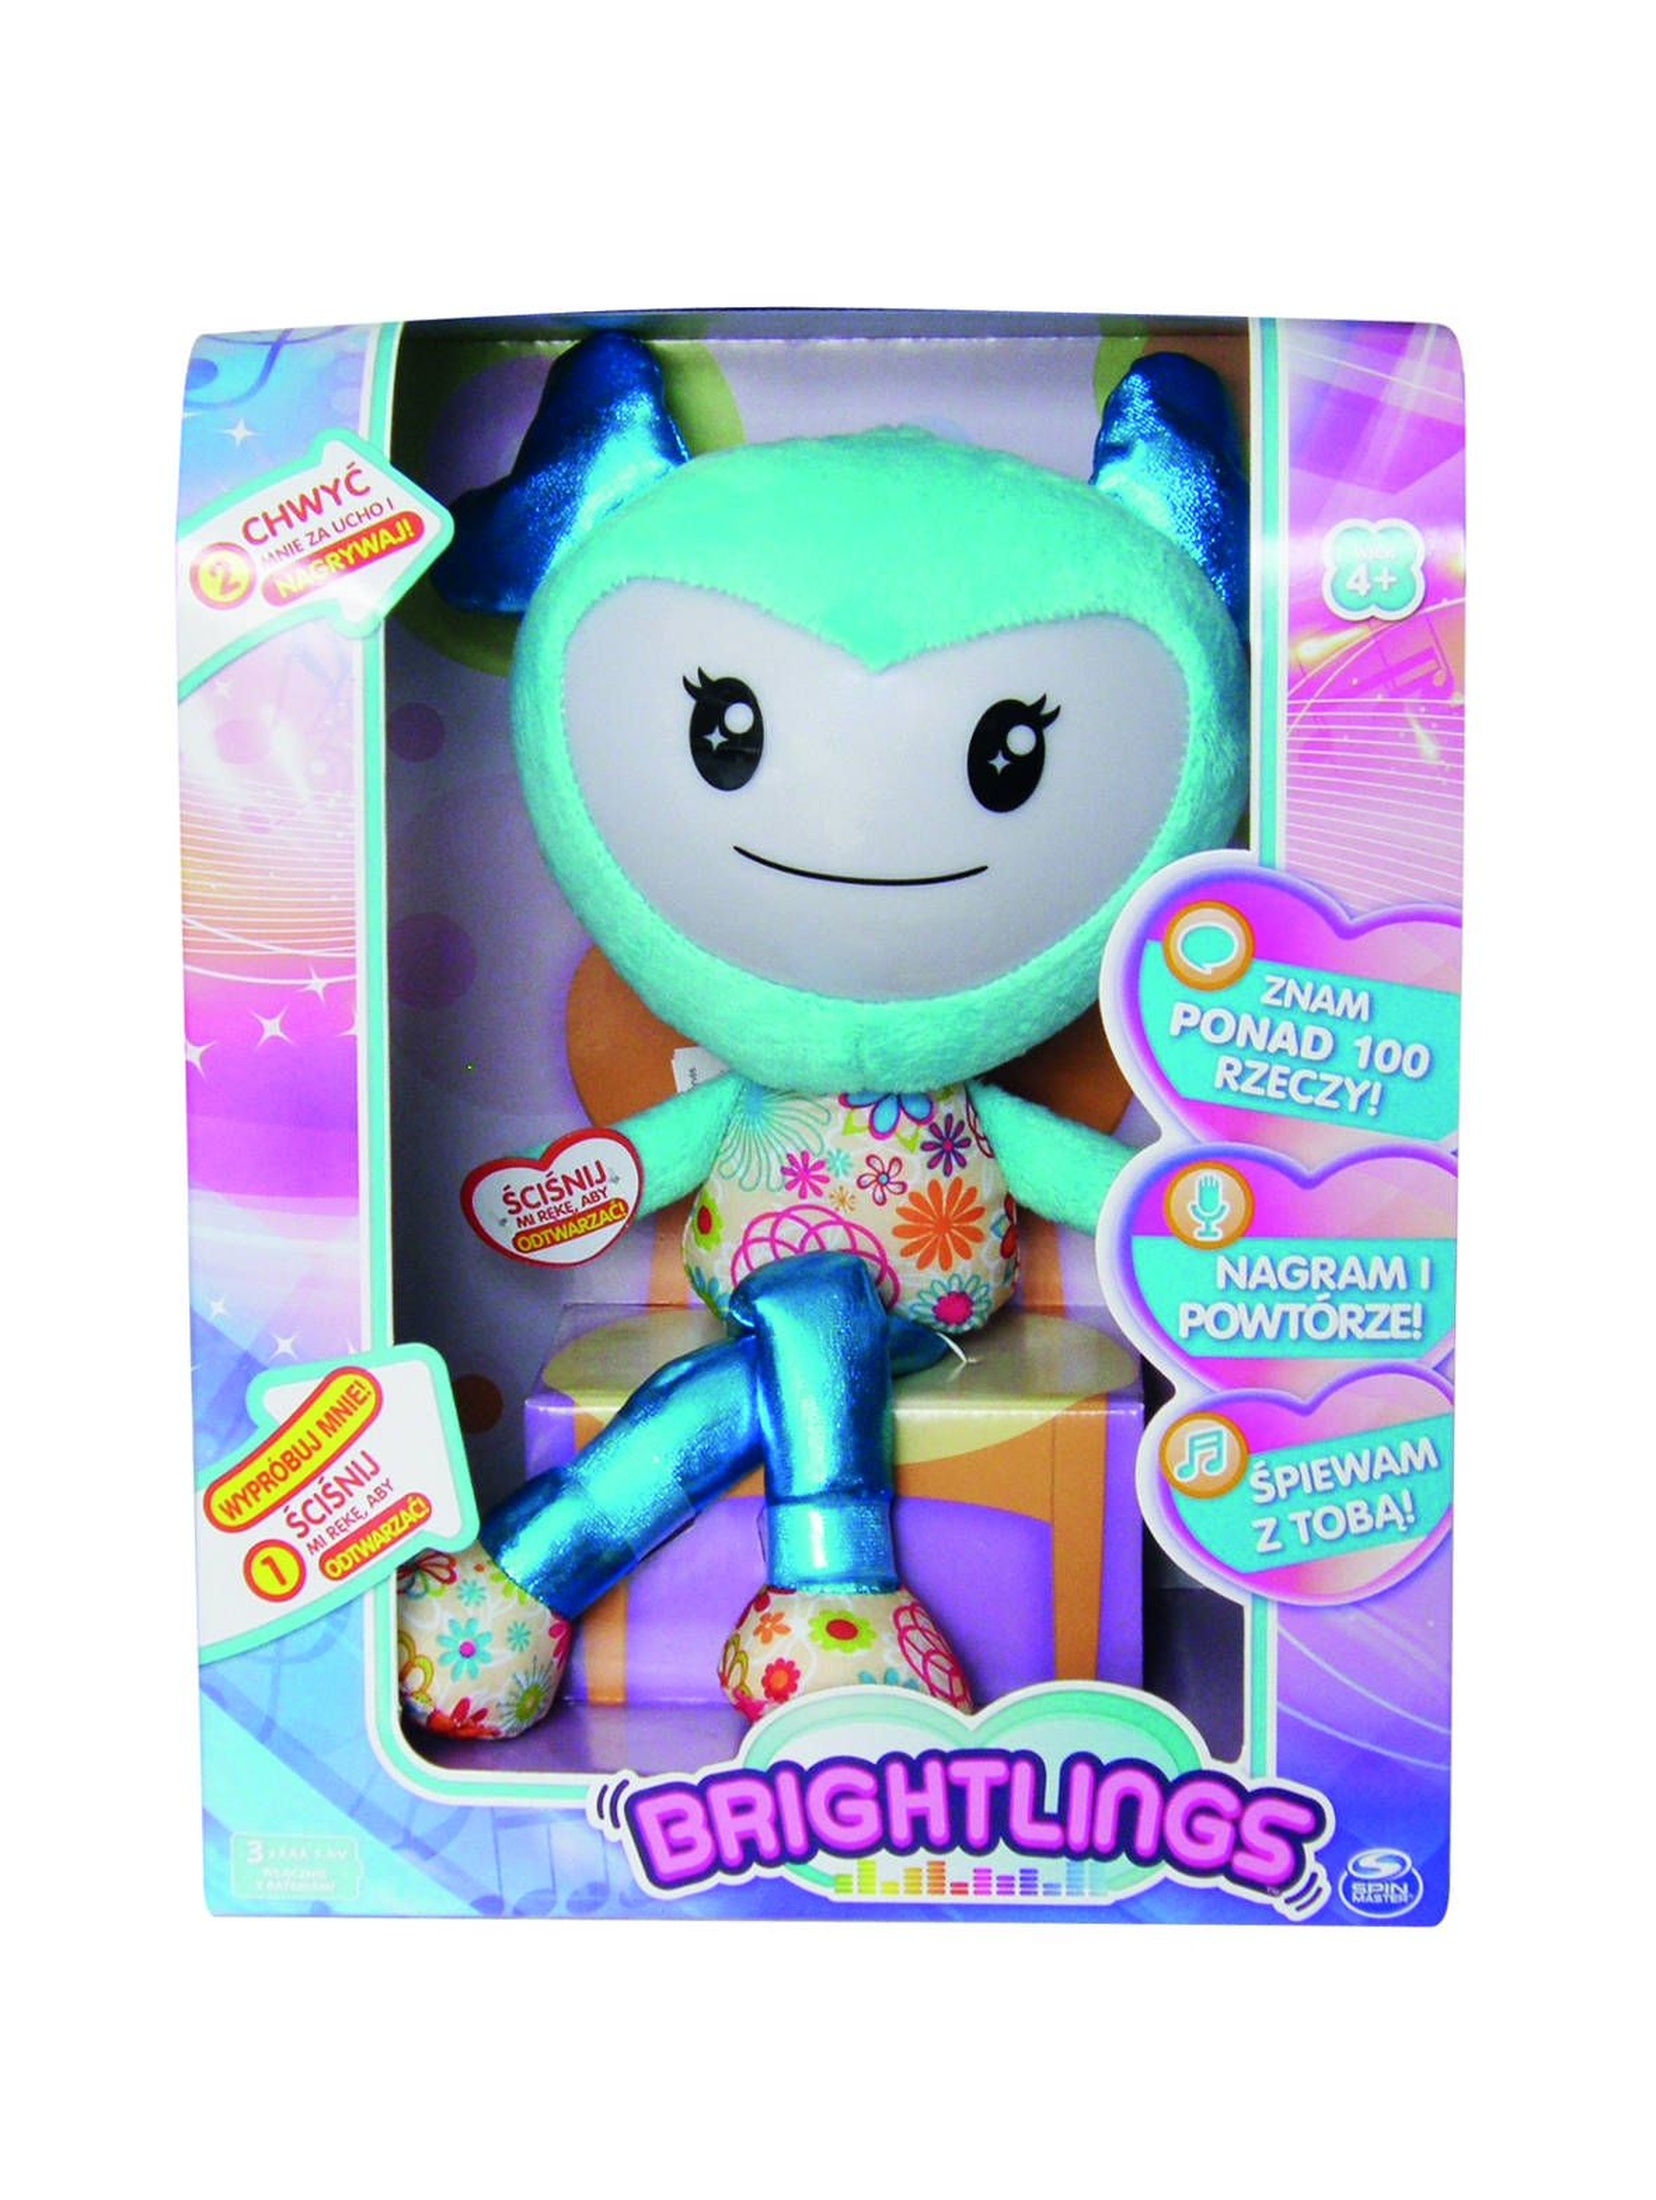 Brightlings - lalka interaktywna